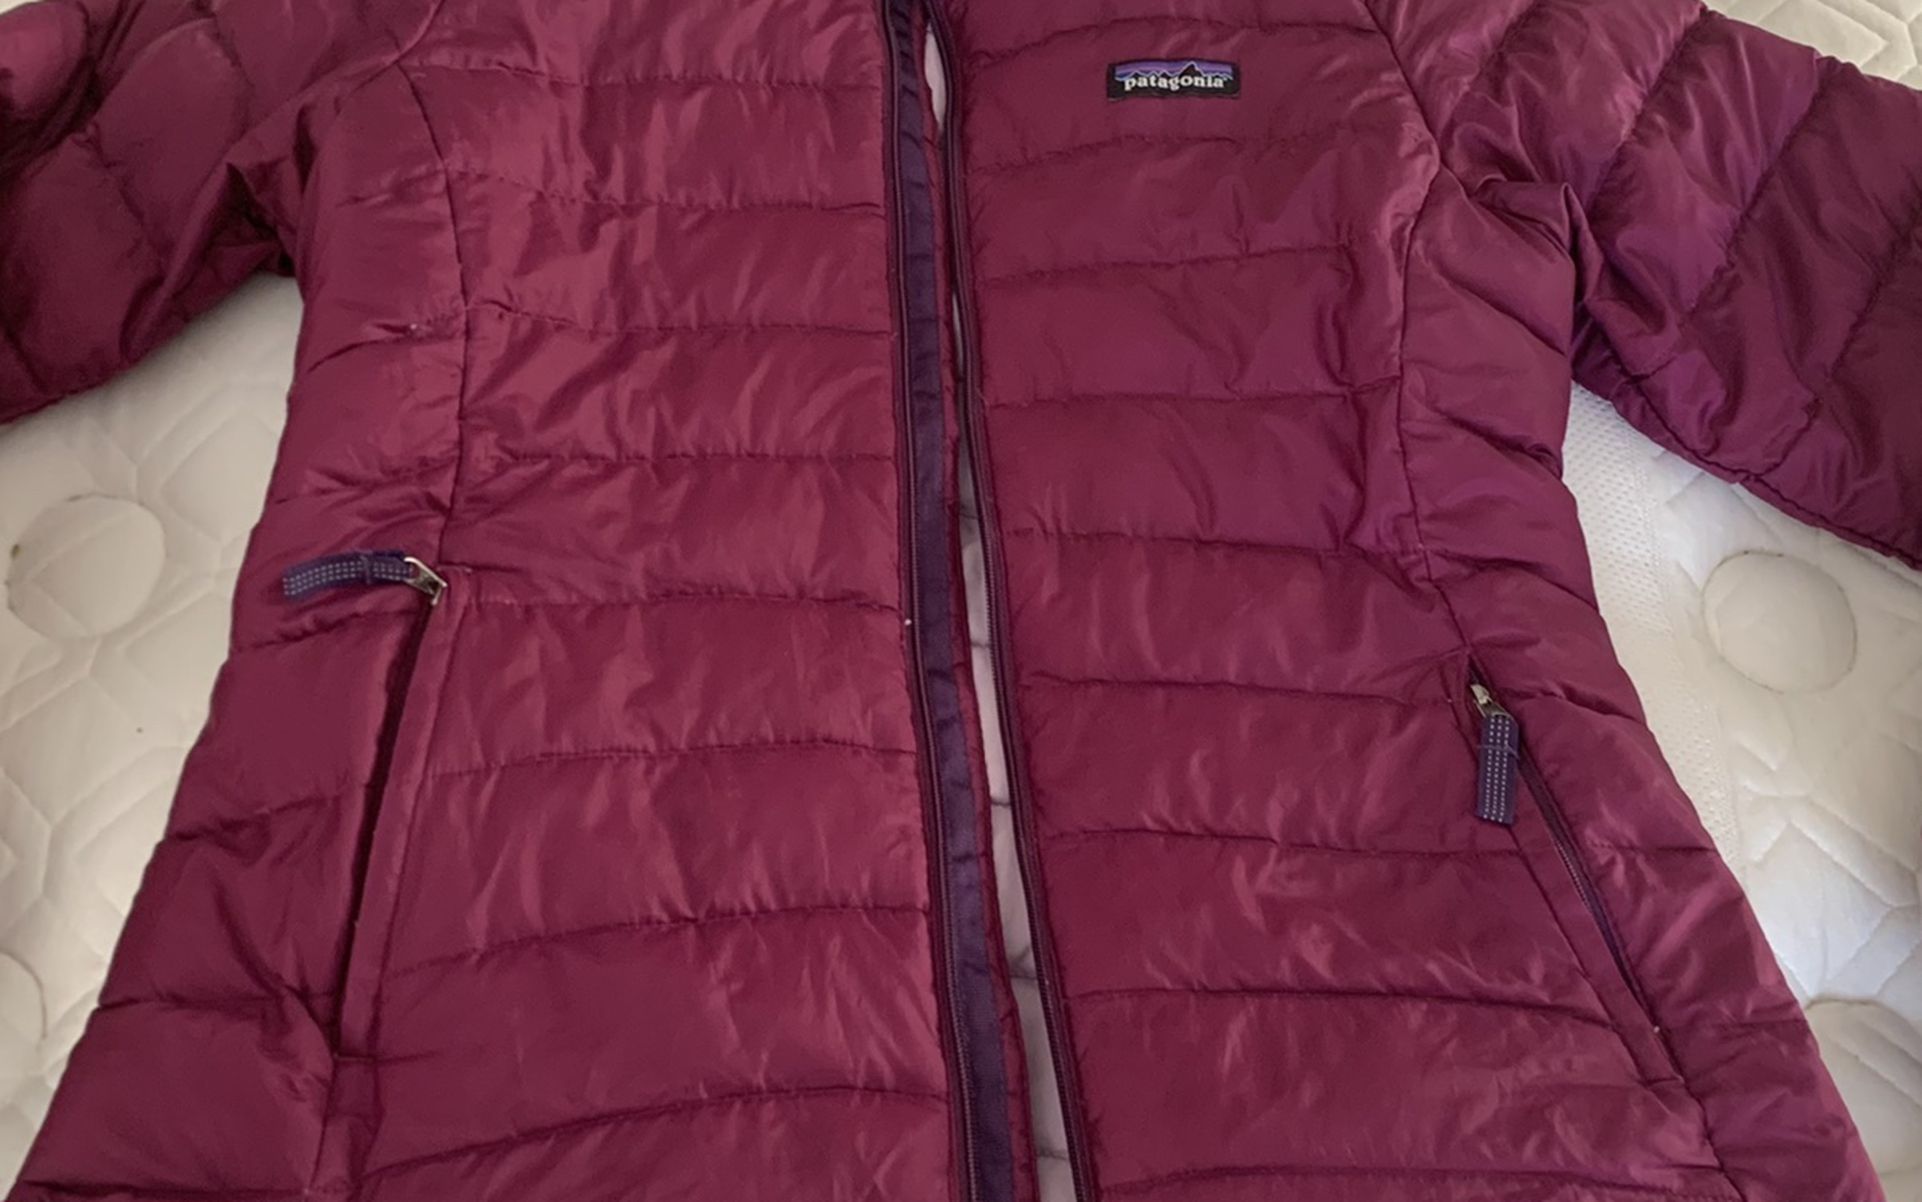 Patagonia Girls Jacket Size Medium / Large Size 12